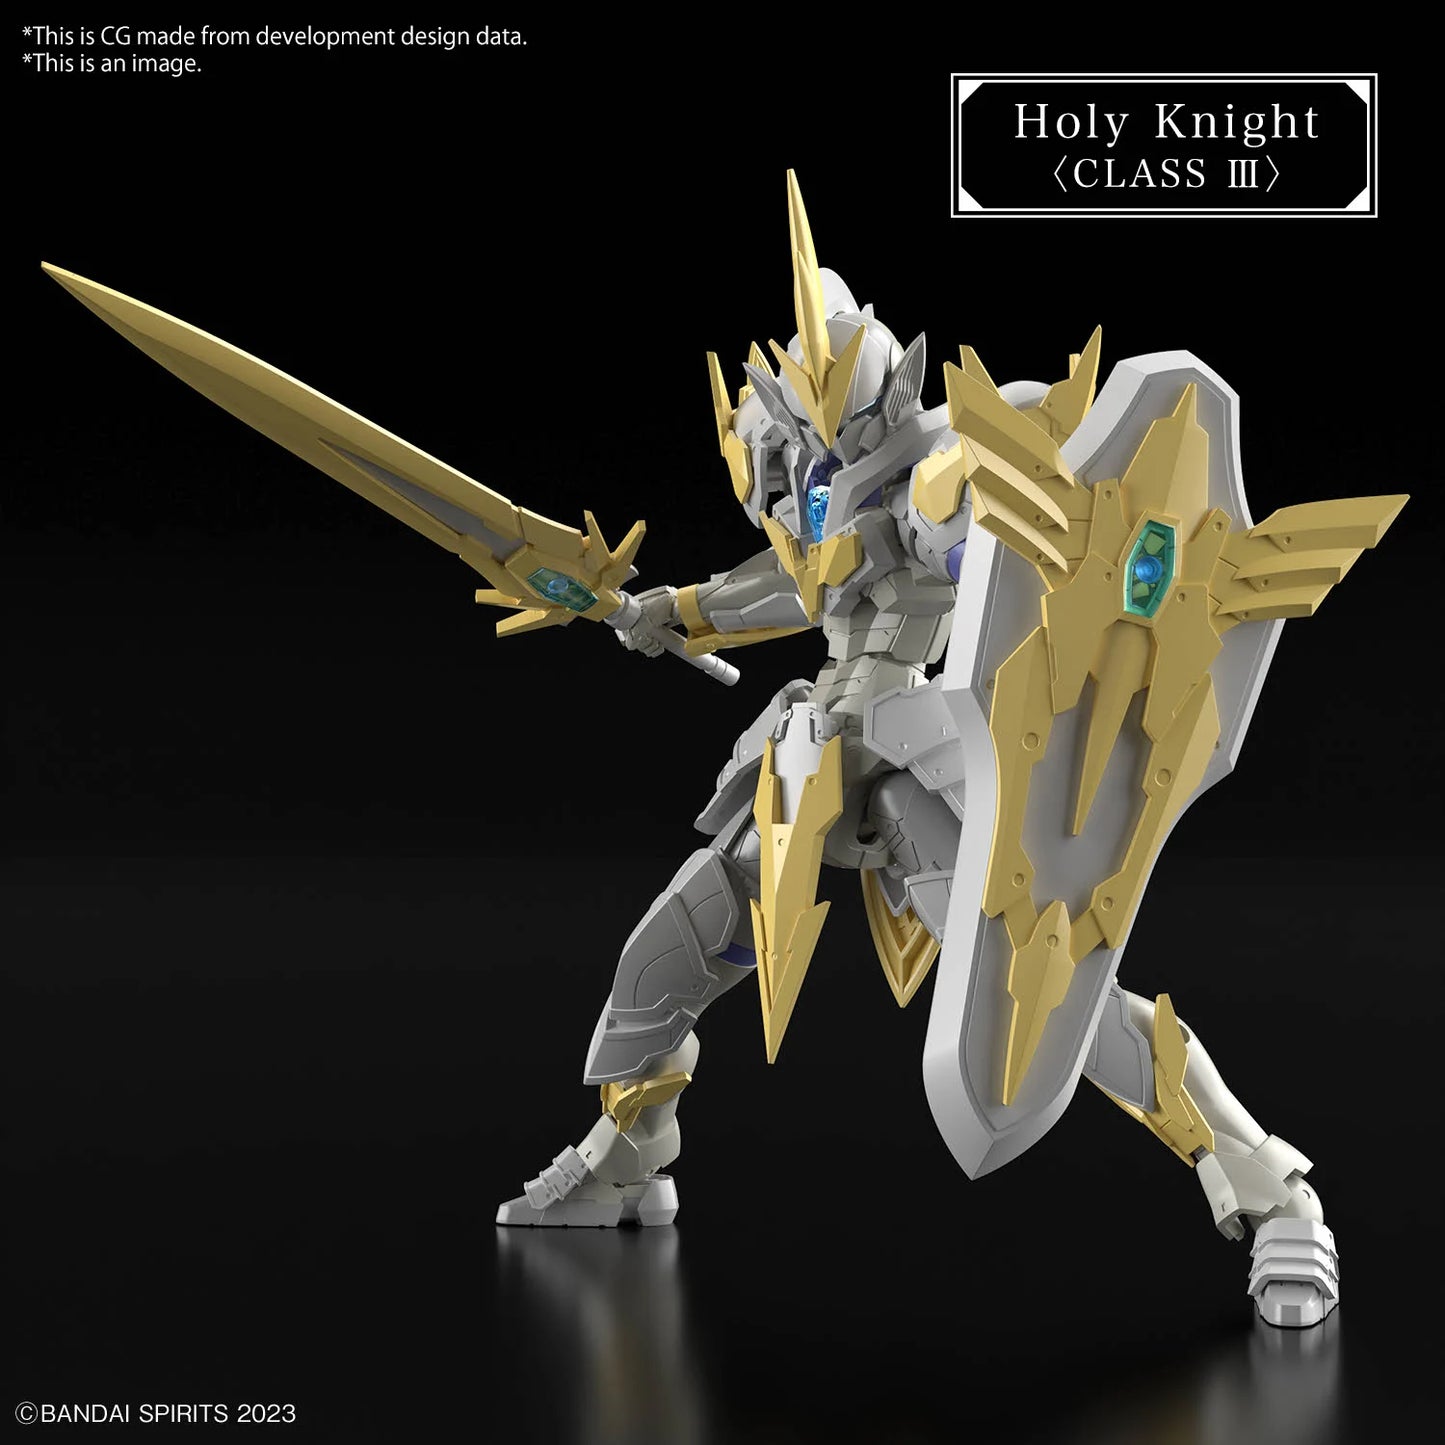 30MF - 1/144 - Liber Holy Knight - Model Kit